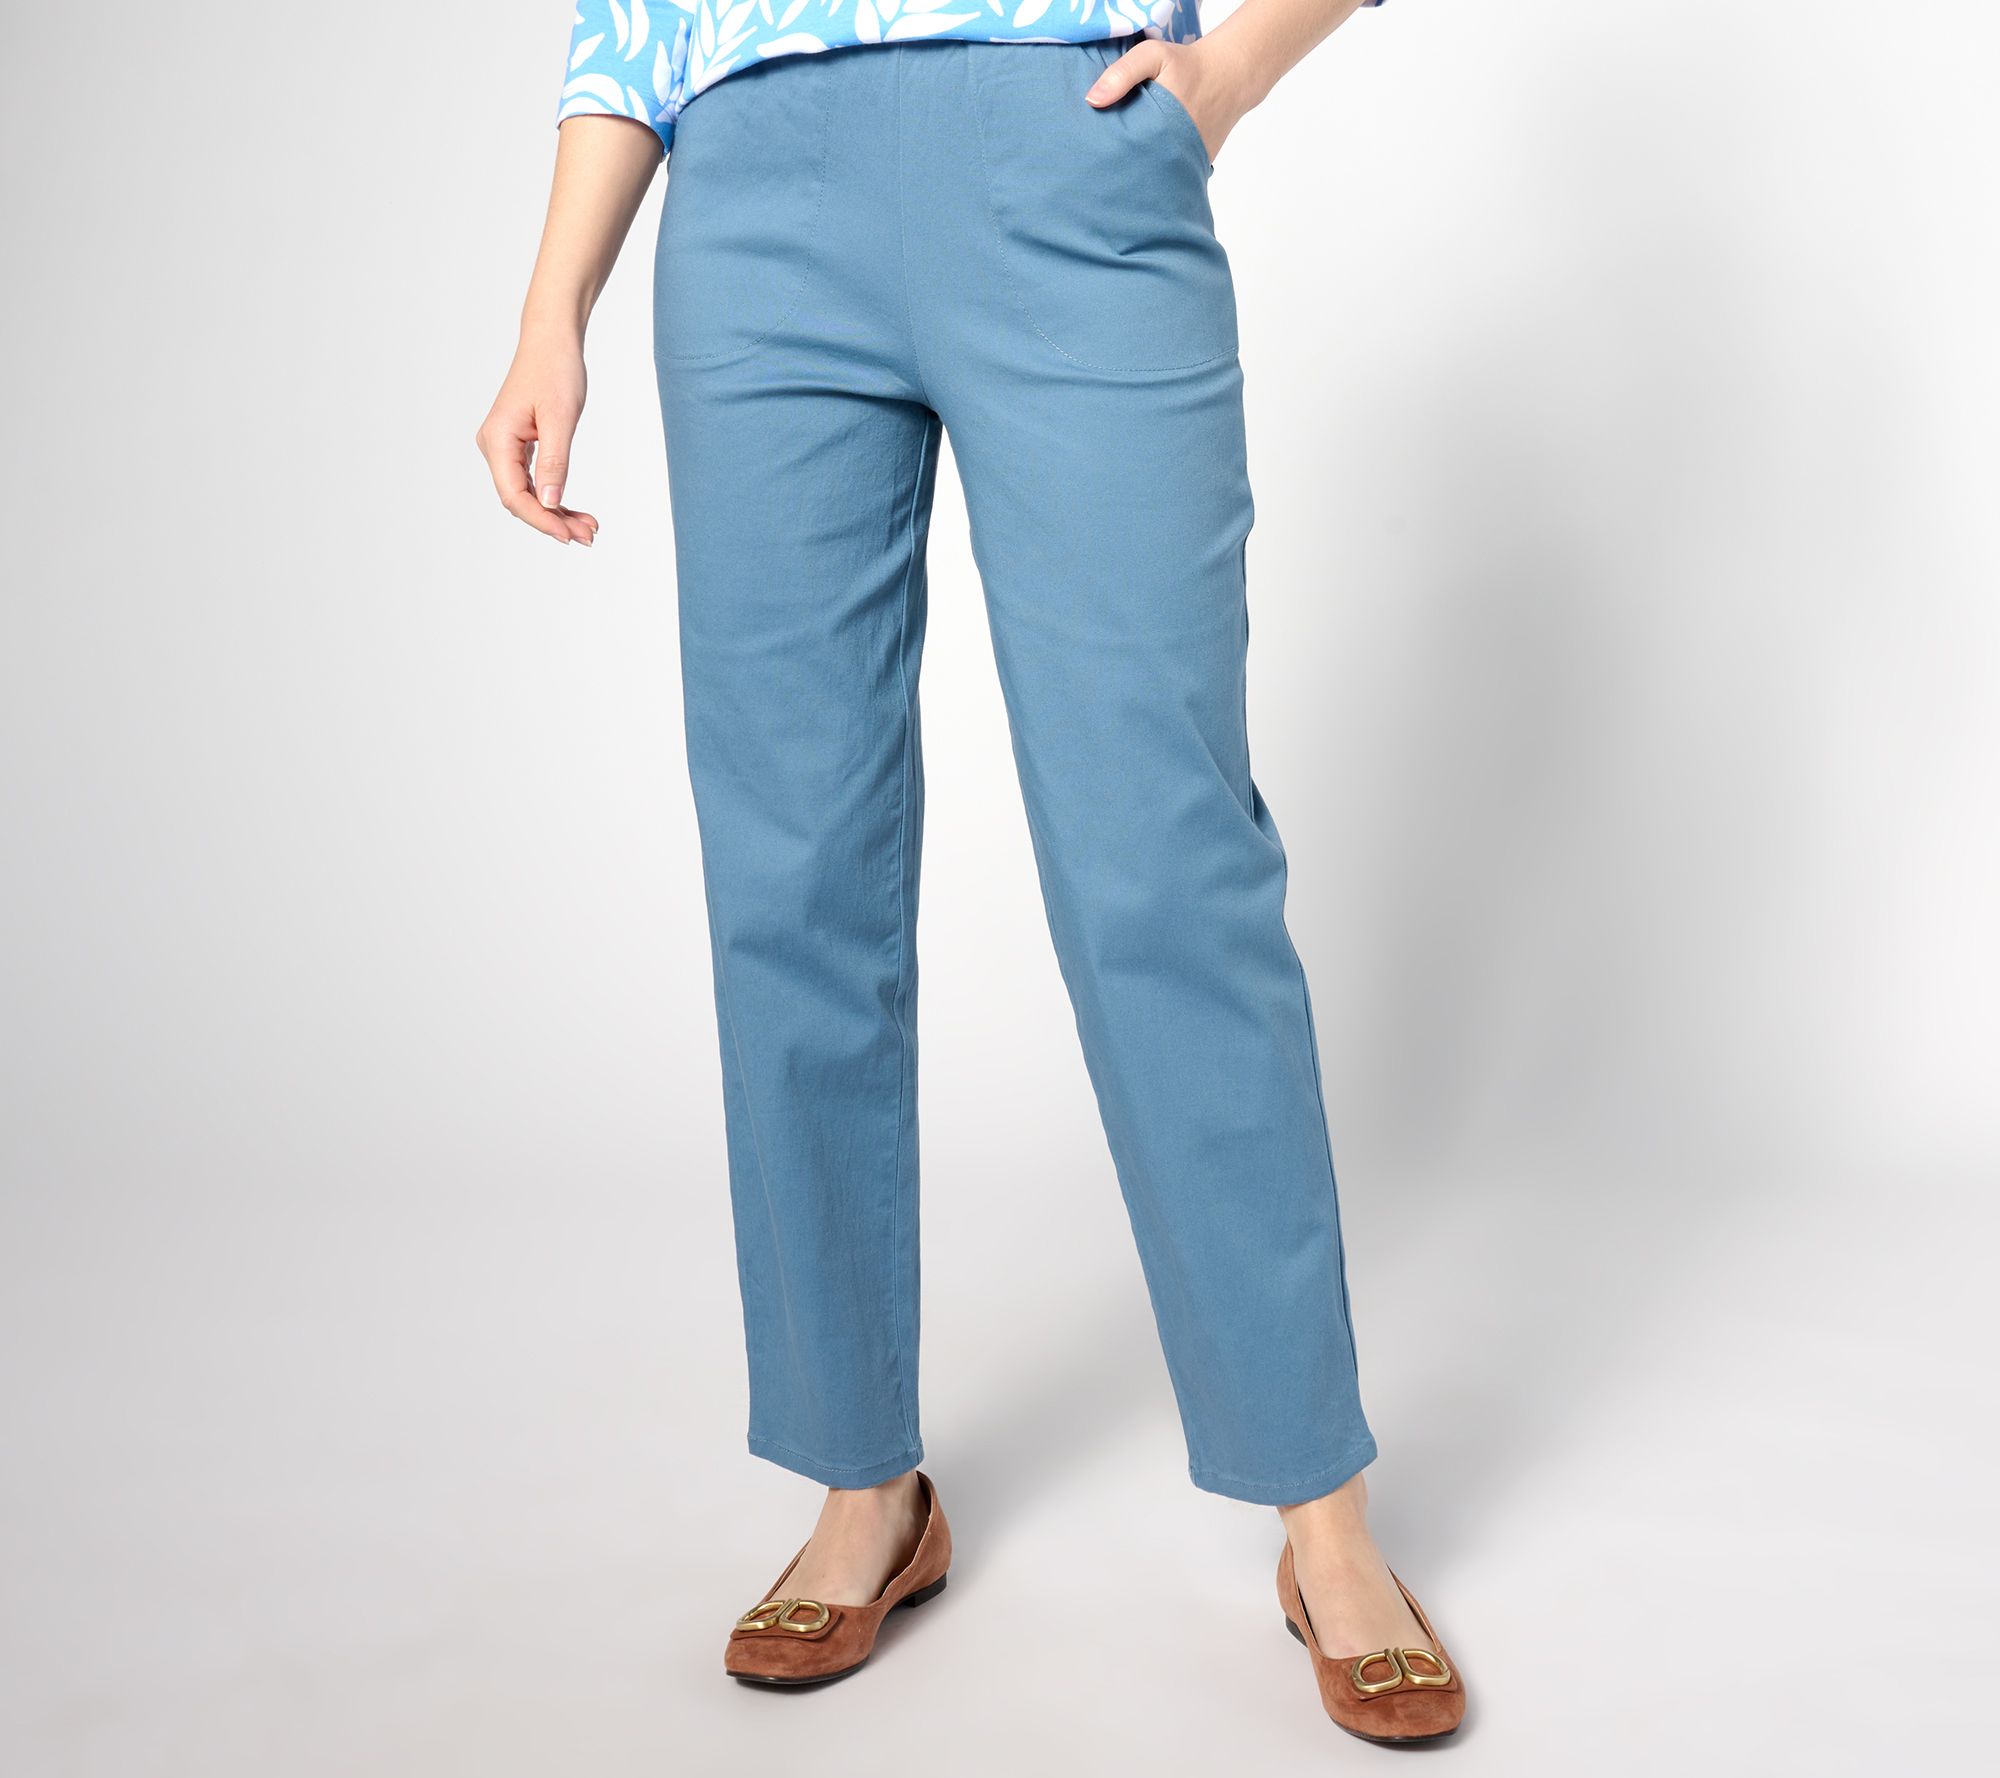 Denim & Co. Original Waist Stretch Regular Side Pocket Pant- Seasonal 